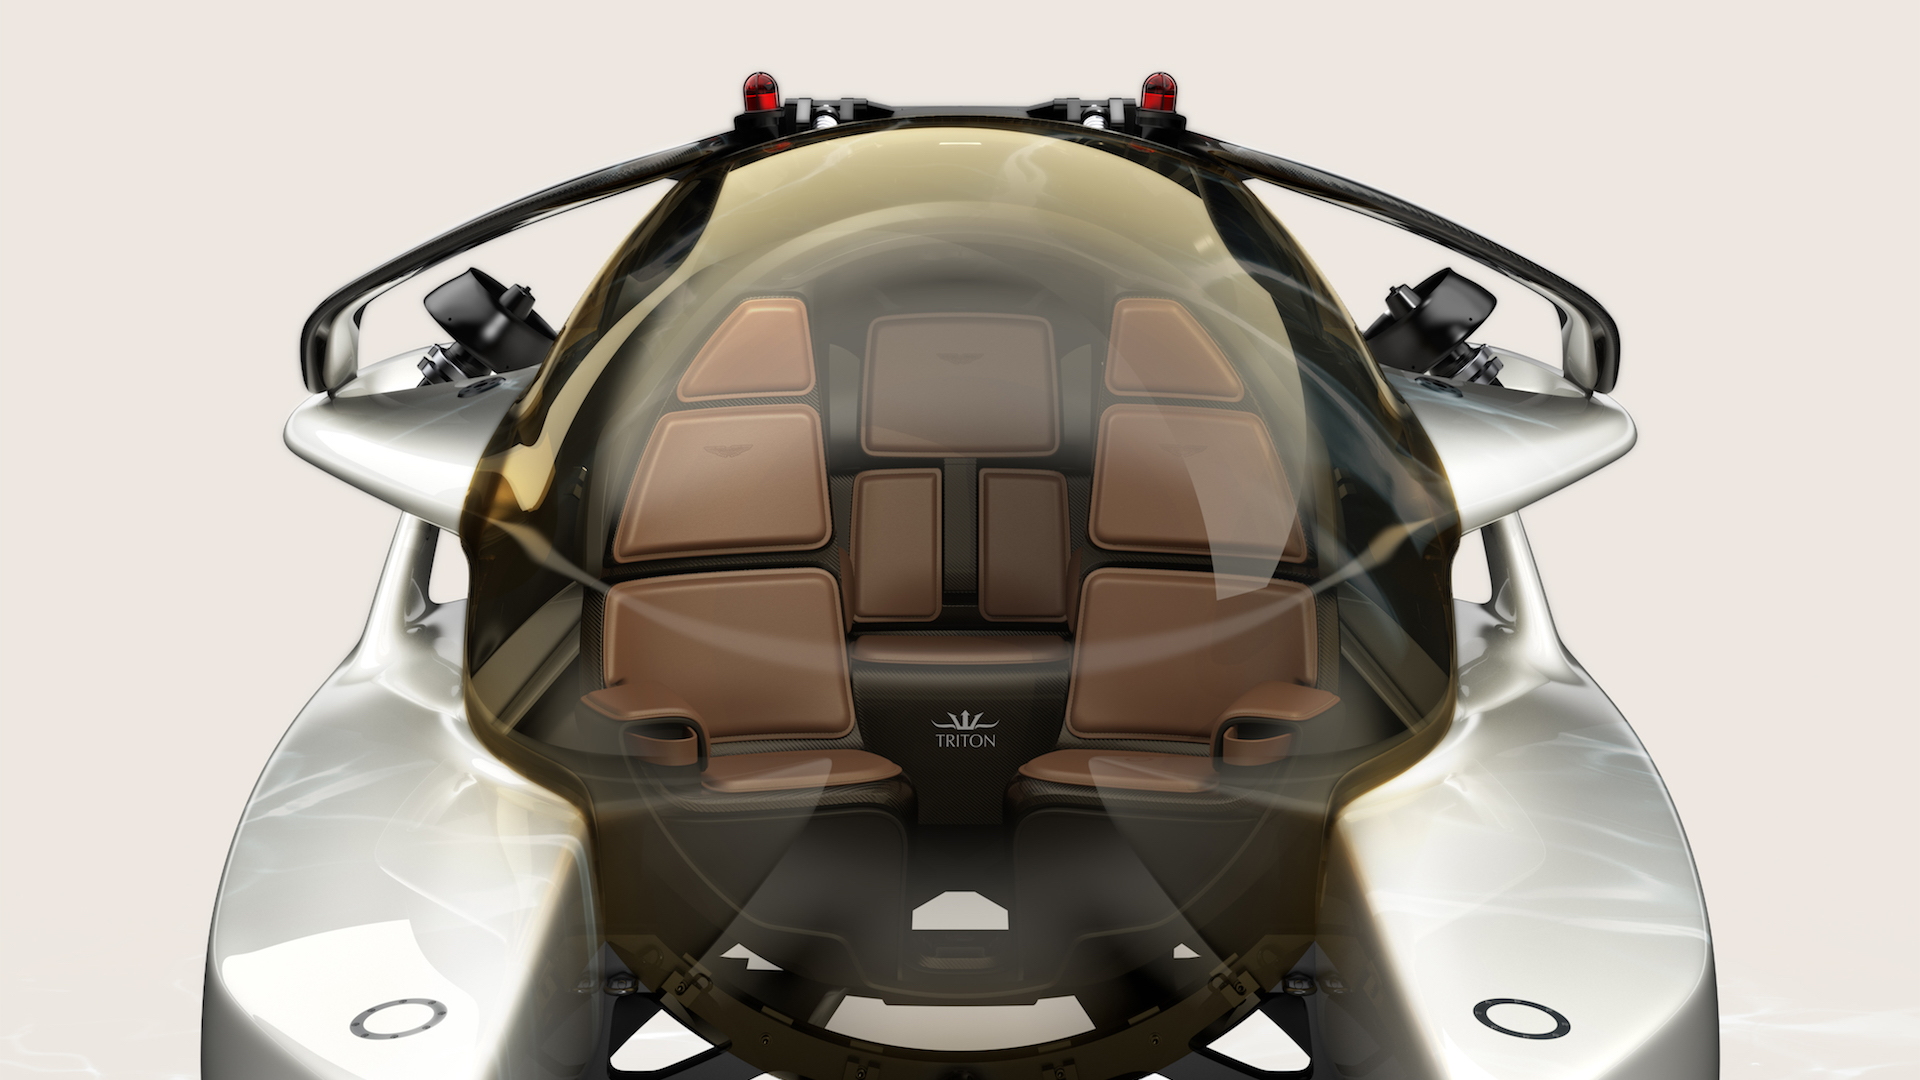 Aston Martin and Triton's Project Neptune submersible